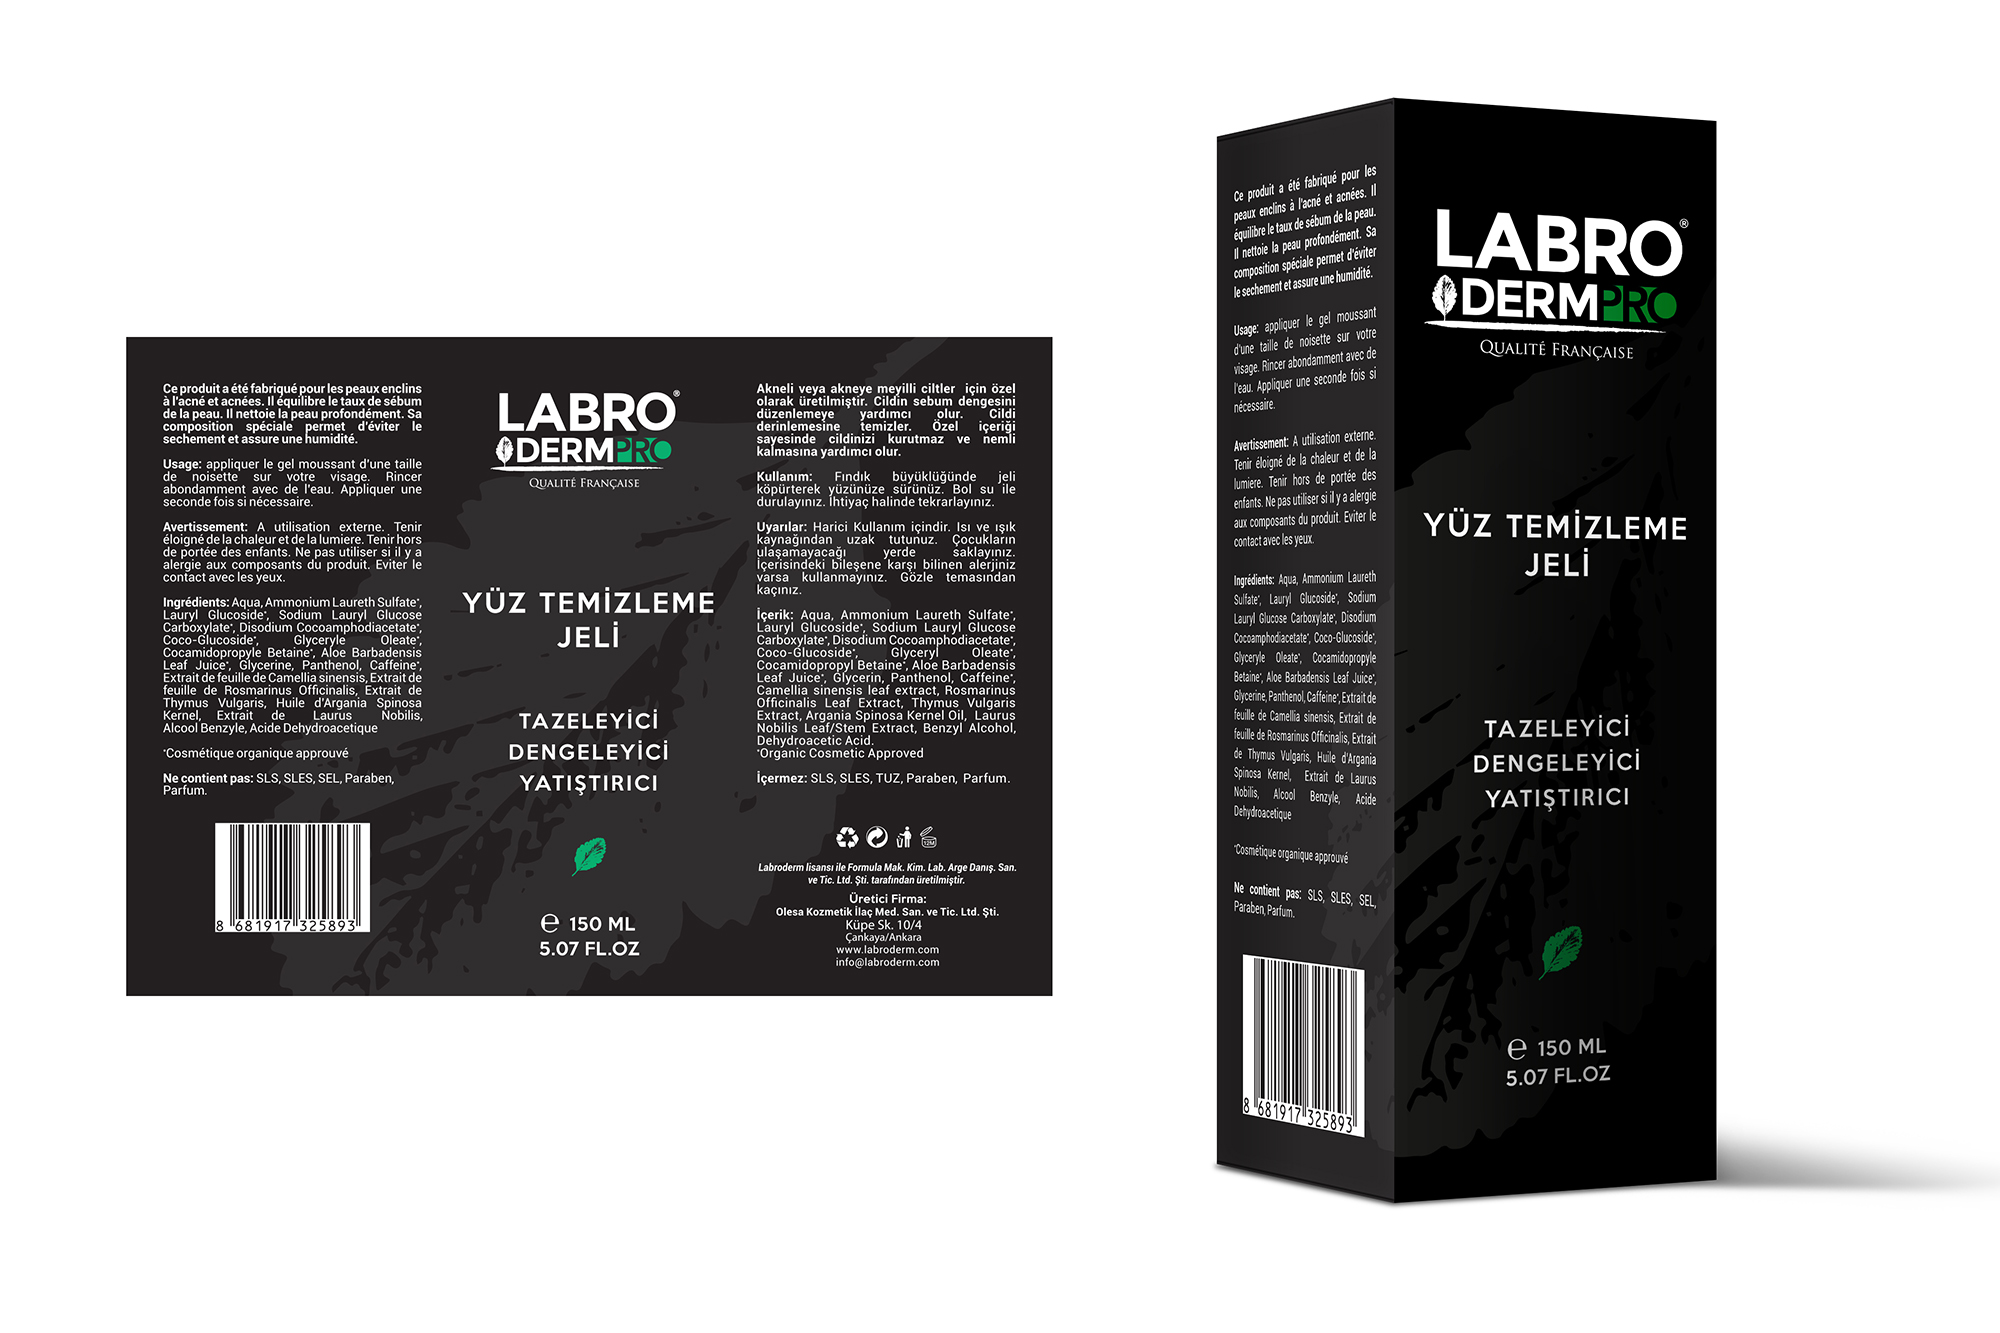 LabrodermPRO Packaging